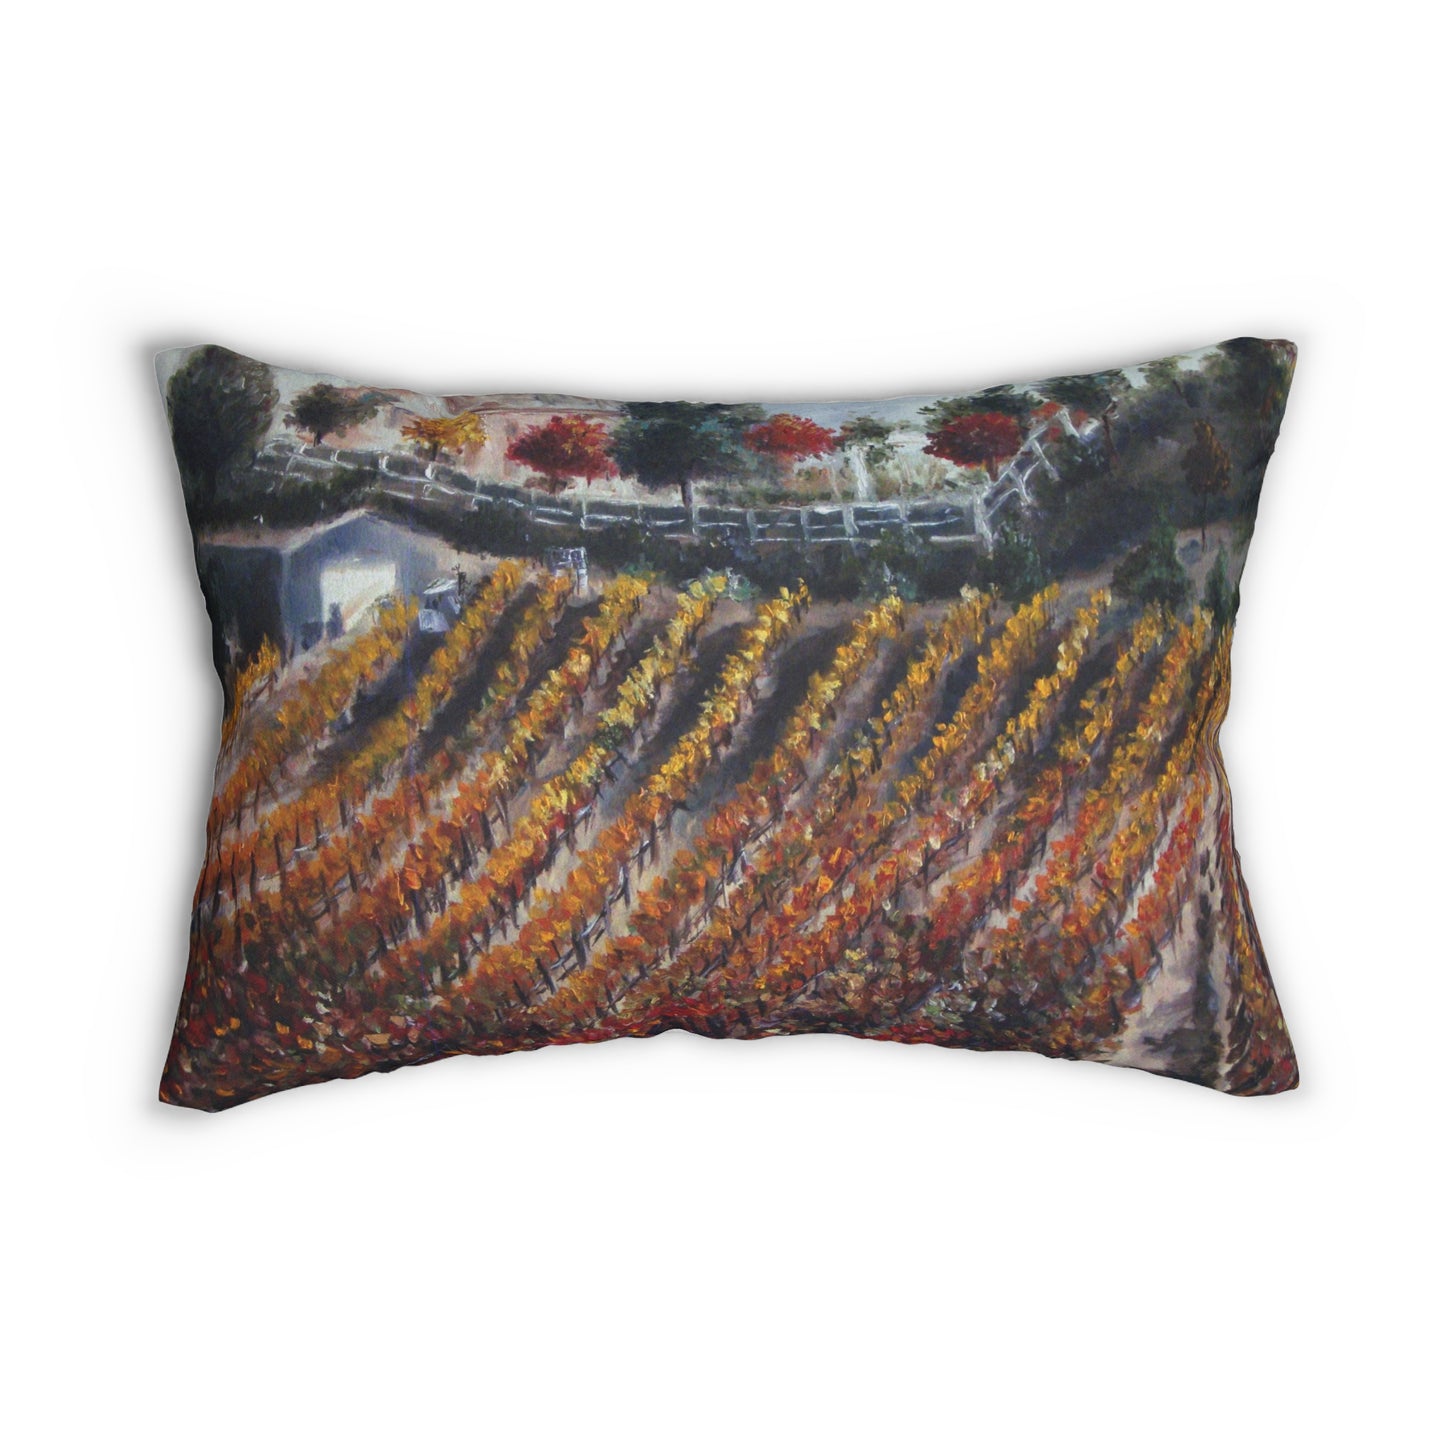 Temecula Lumbar Pillow featuring "Vindemia Winery in Autumn" painting and "Temecula"